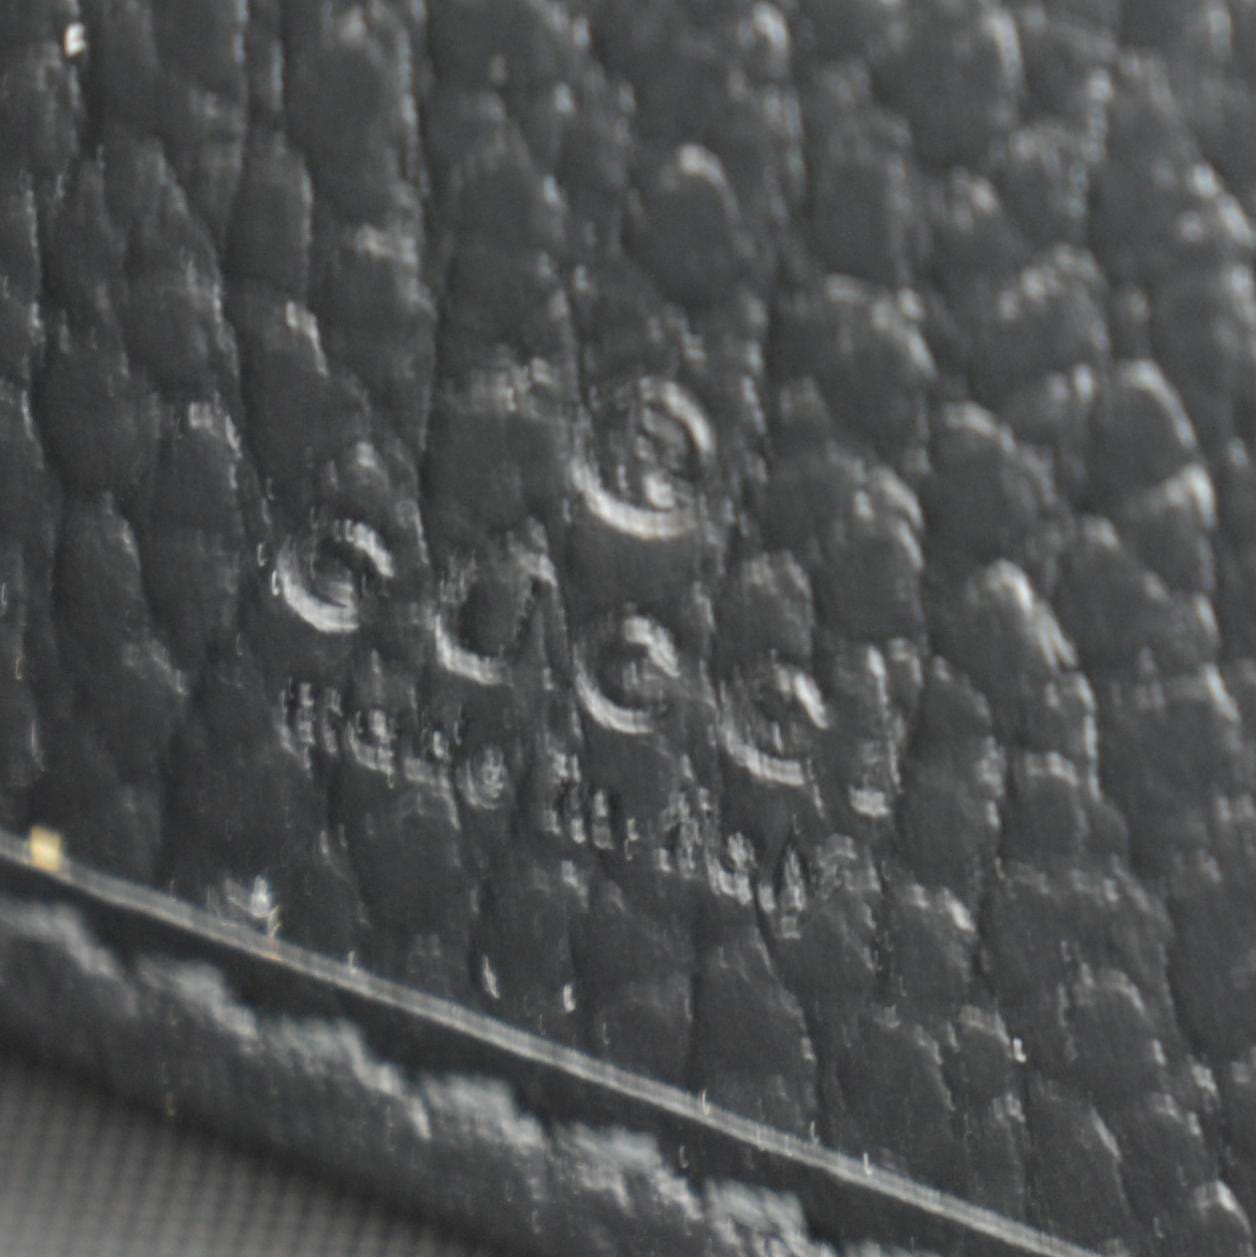 GUCCI GG Marmont Canvas Leather Zip Around Wallet Black 456117